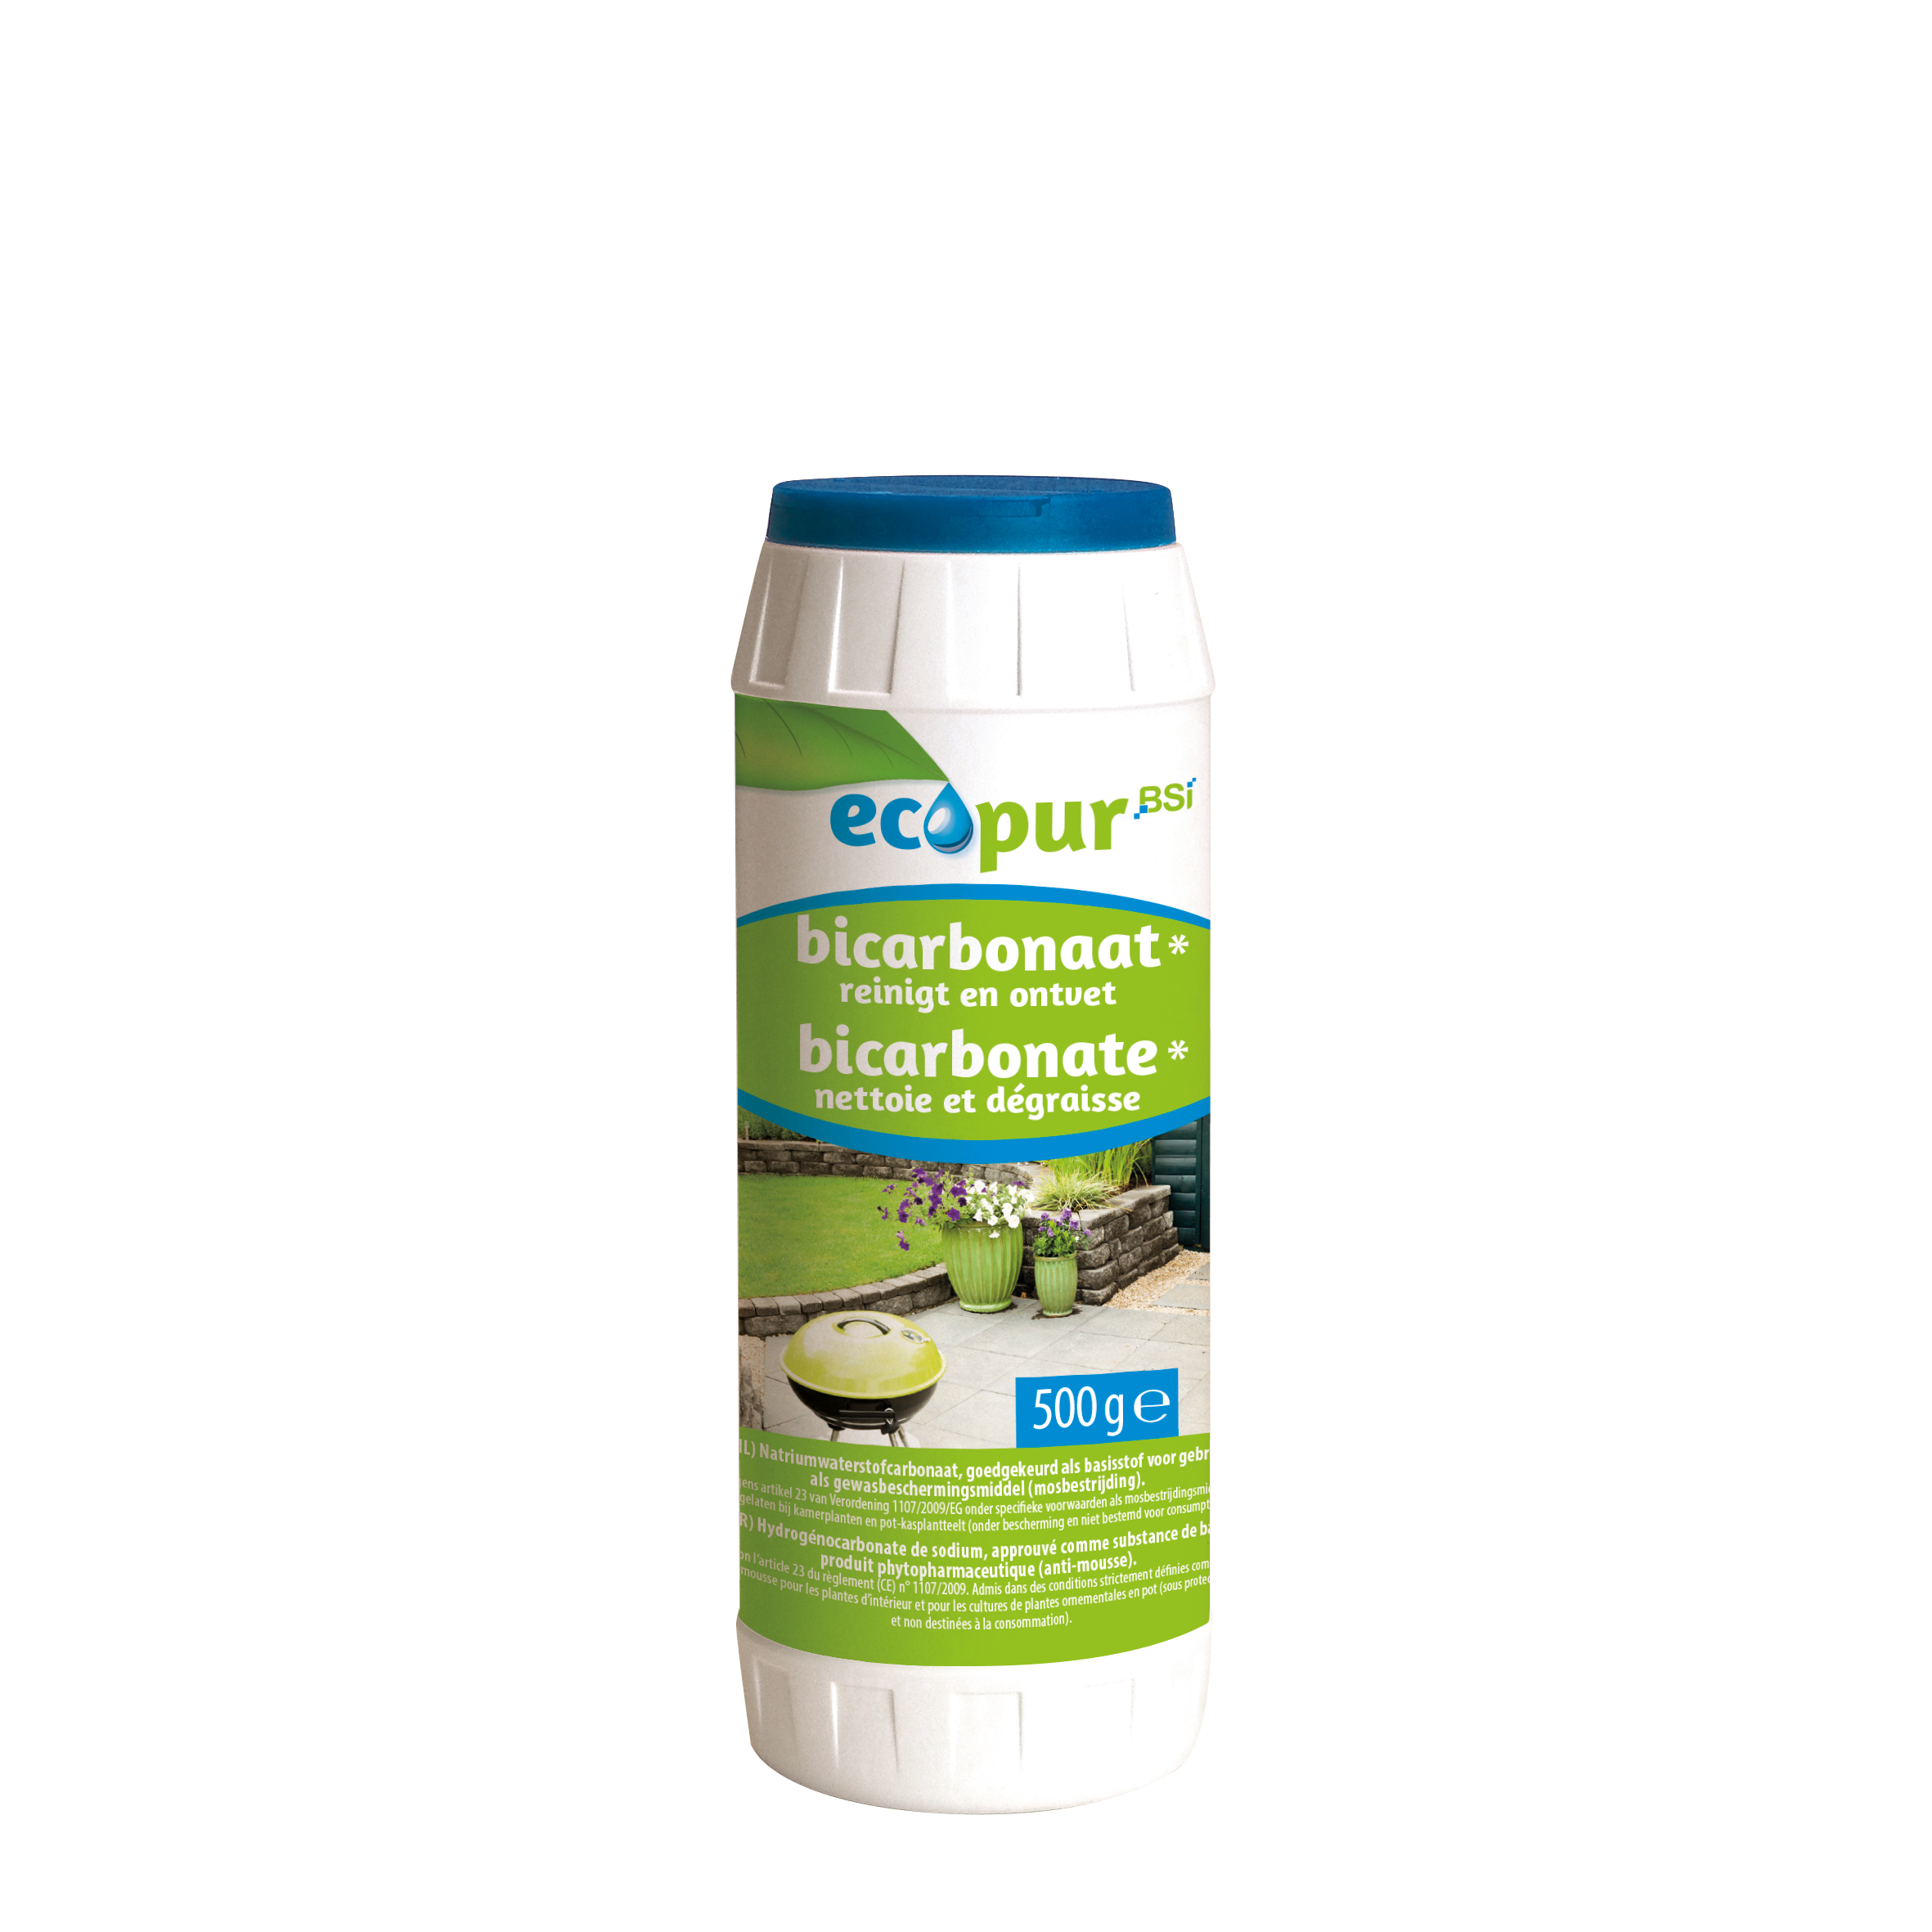 Ecopur Bicarbonaat Fungicide/Antimos 500g BE/NL/LU image